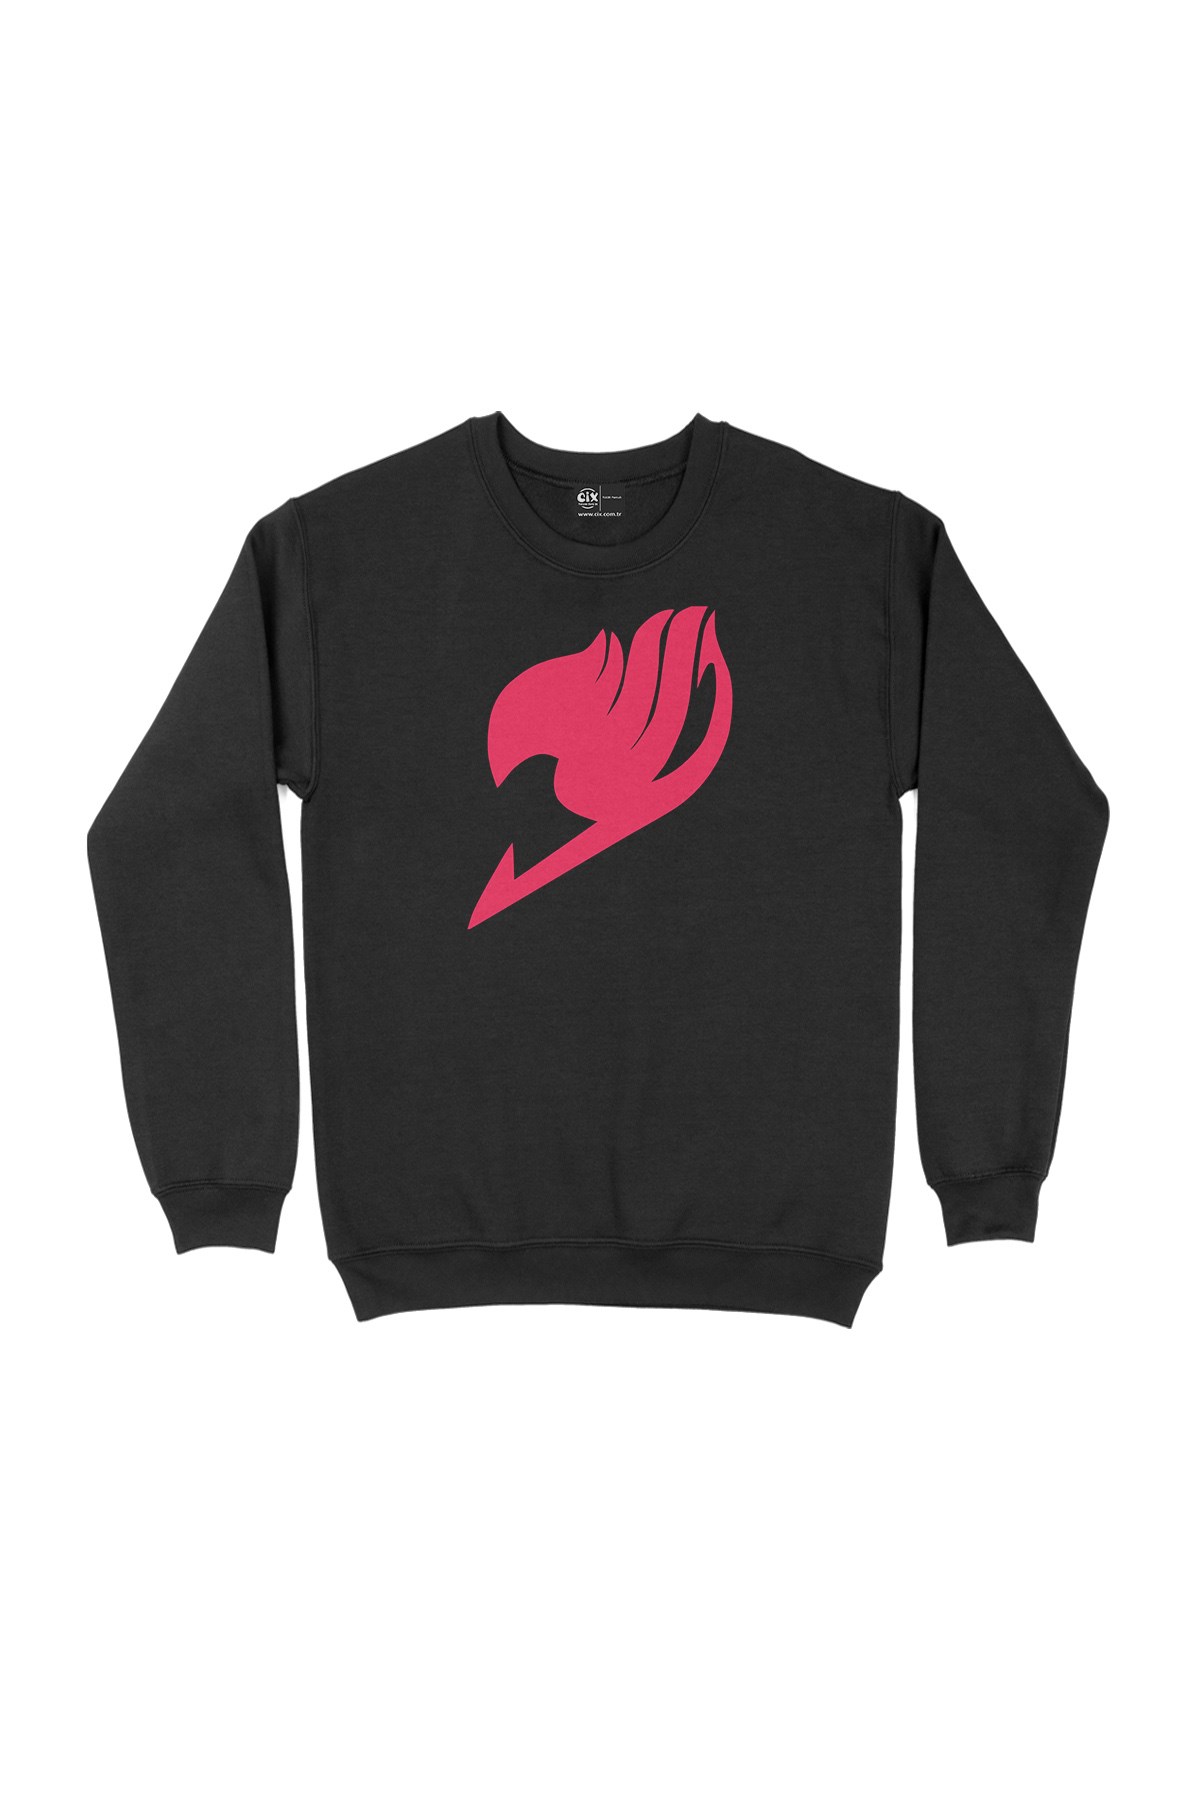 Cix Fairy Tail Logolu Siyah Sweatshirt - Ücretsiz Kargo